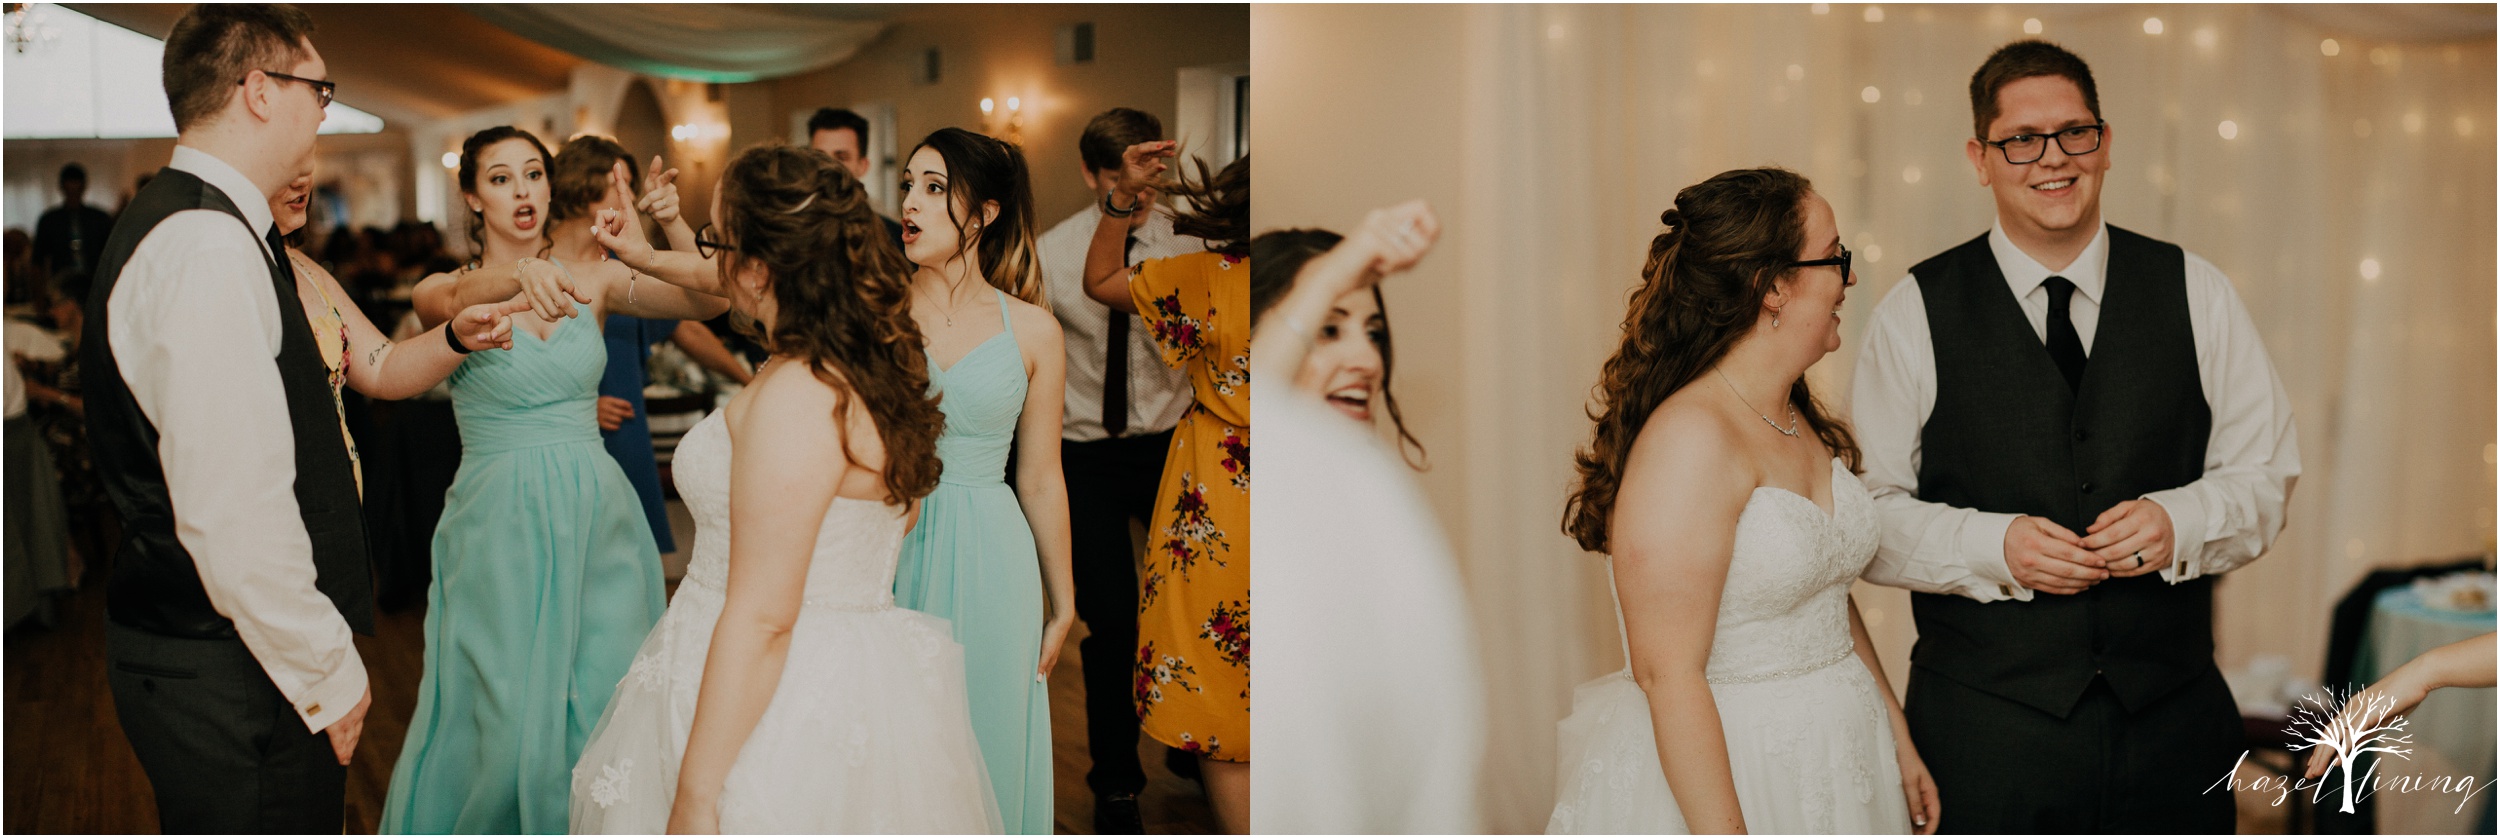 laura-zach-mccaskill-harmony-hall-lebanon-valley-college-summer-wedding-hazel-lining-photography-destination-elopement-wedding-engagement-photography_0134.jpg